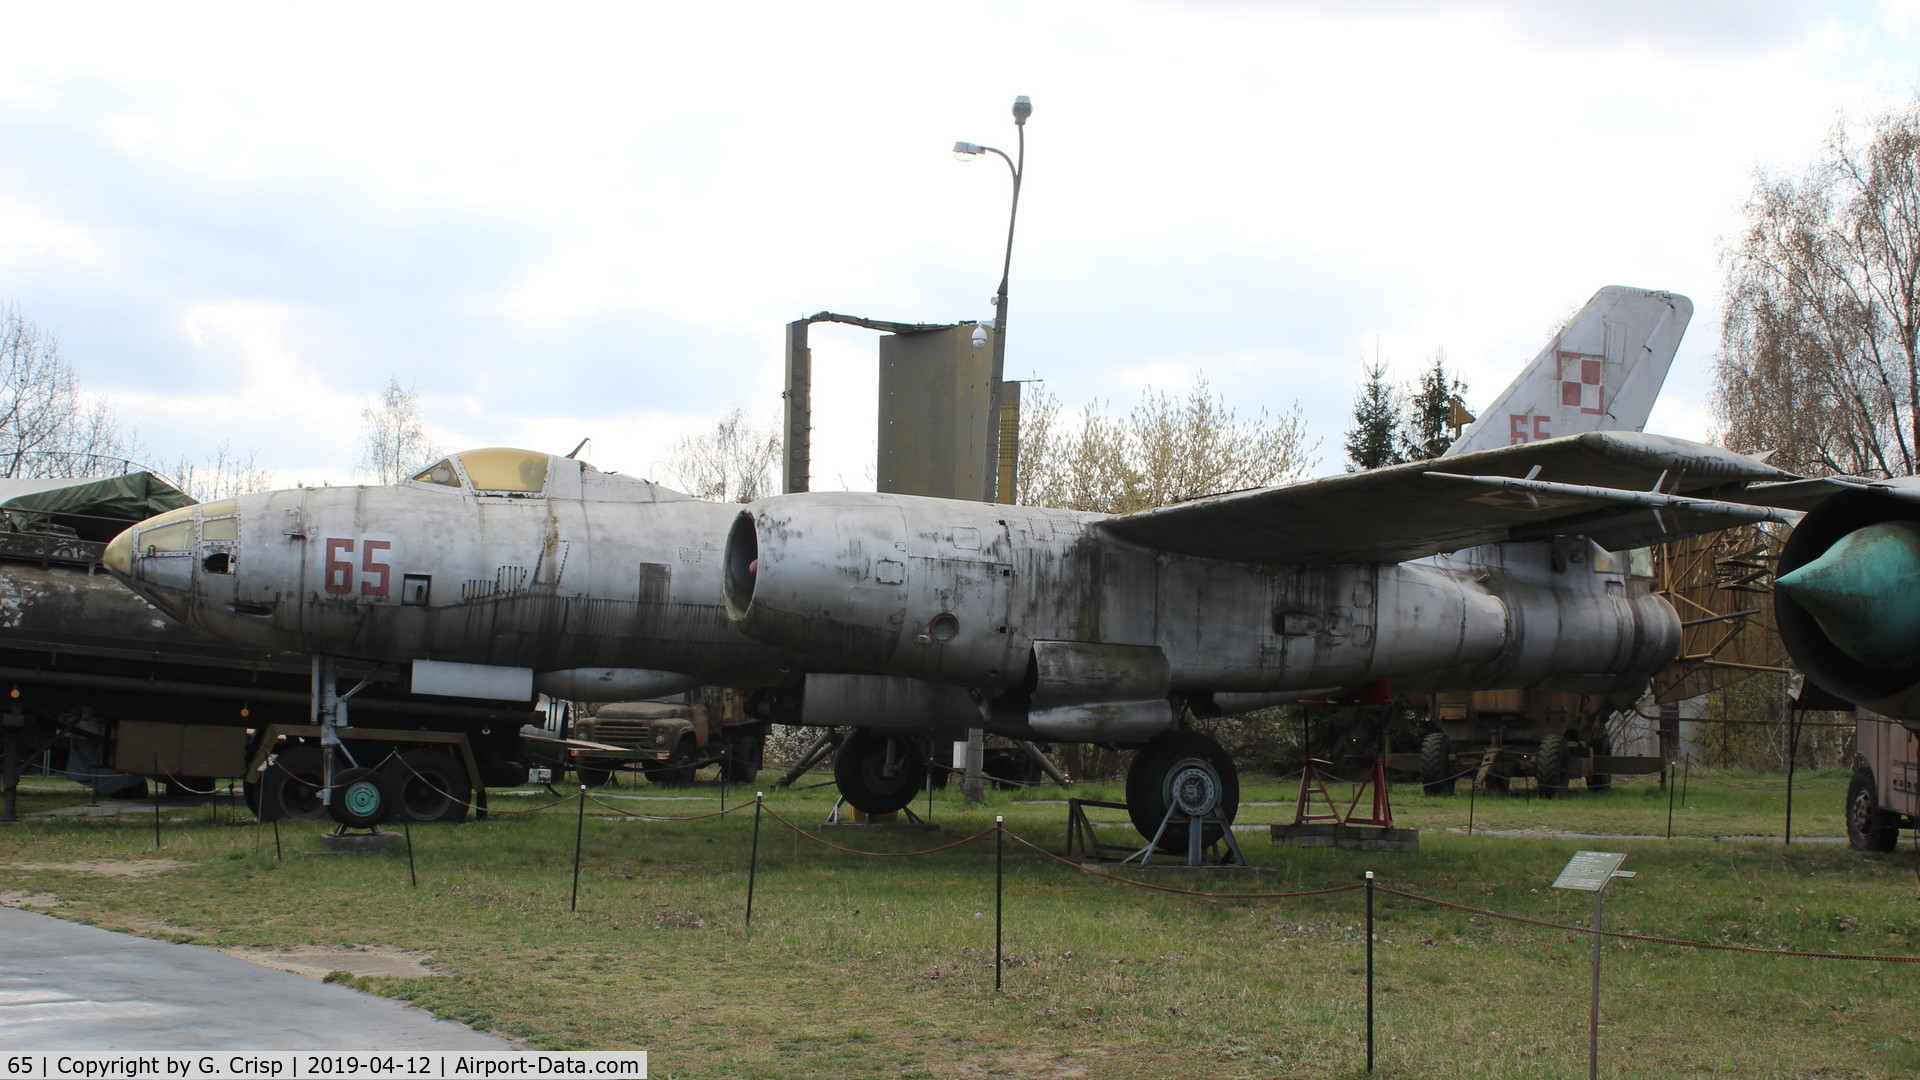 65, Ilyushin Il-28 C/N 56729, Museum of Military Technology
Fort Sadyba, Warsaw, Poland